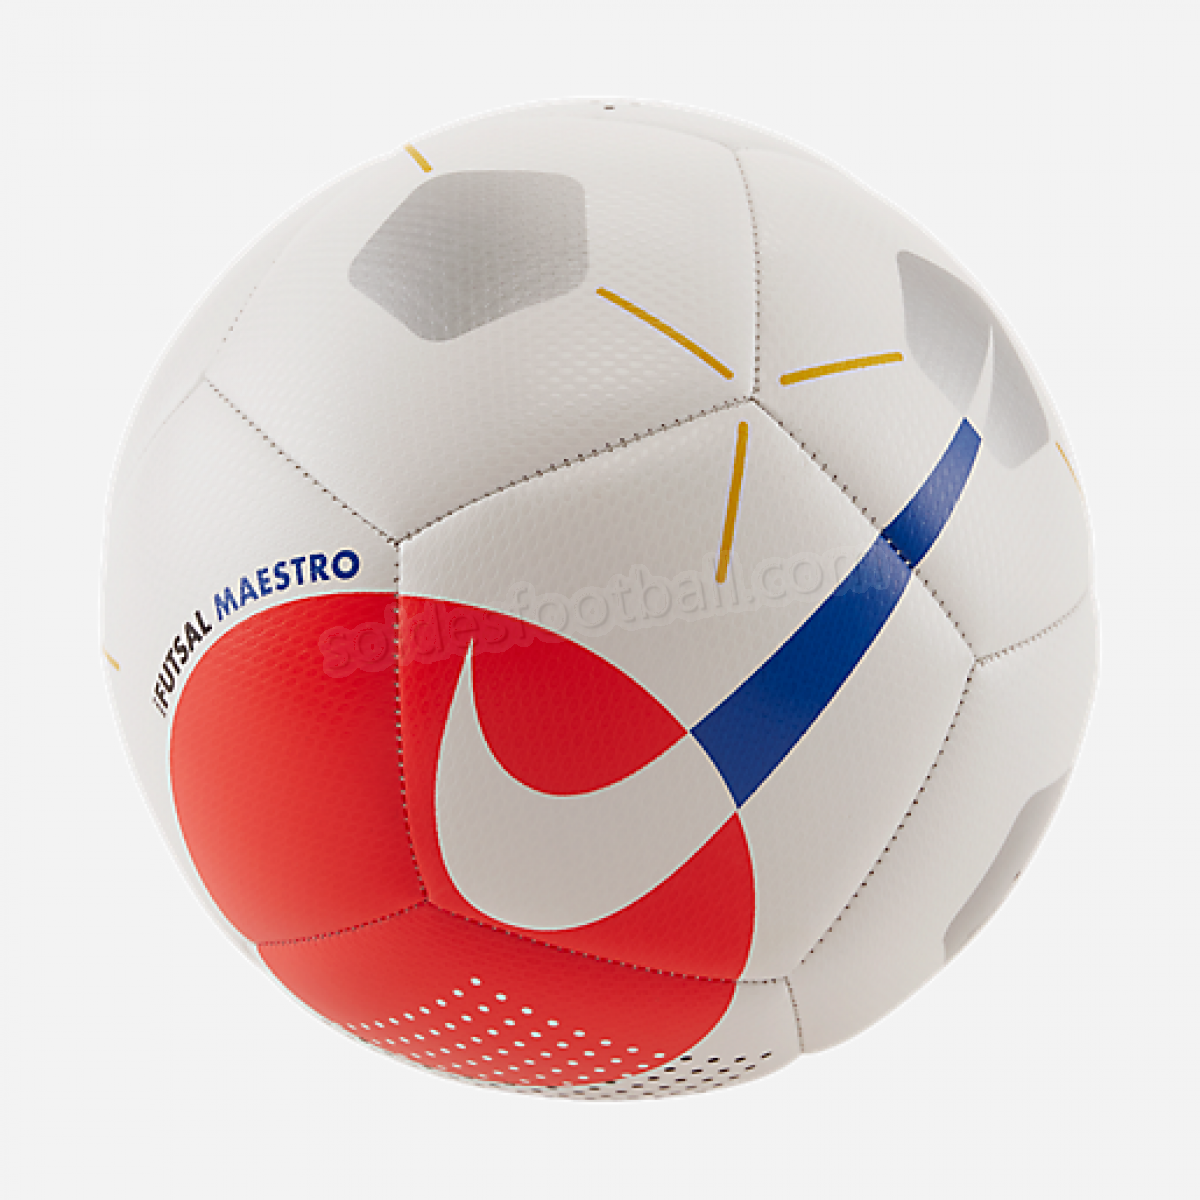 Ballon de football Futsal Maestro-NIKE en solde - Ballon de football Futsal Maestro-NIKE en solde